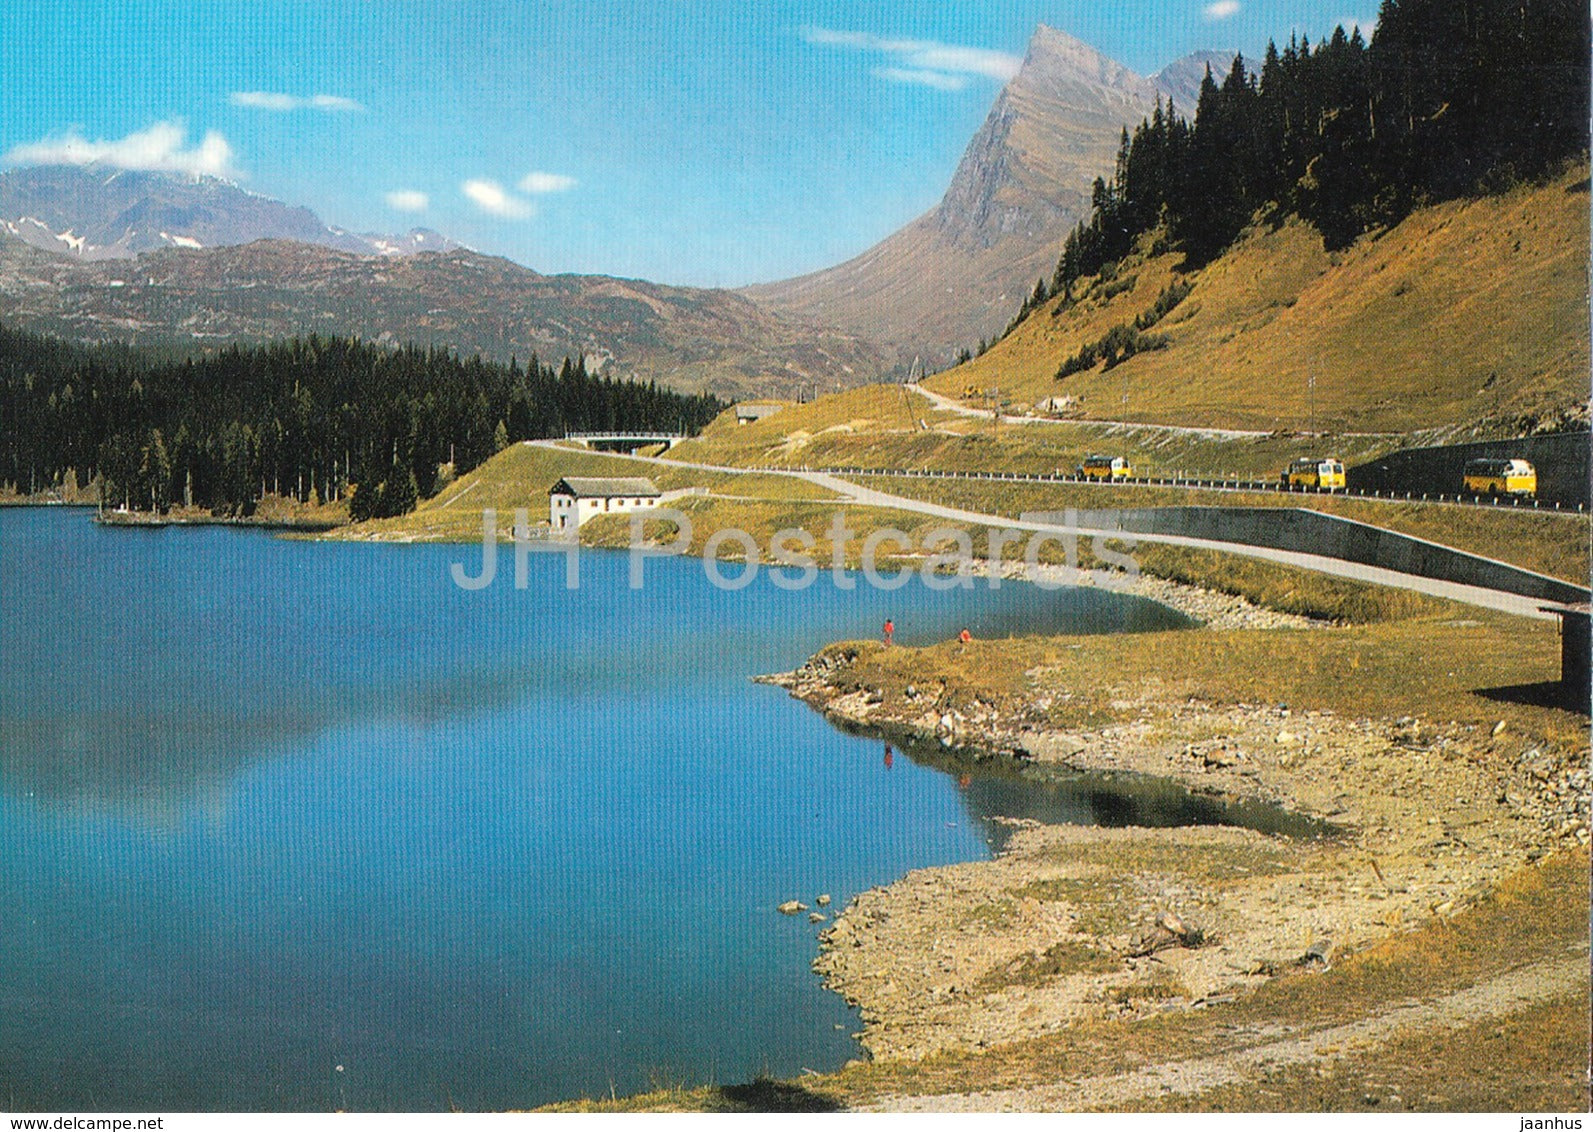 San Bernardino Strasse N13 - Sudseite mit P Uccello - 5540 - Switzerland - unused - JH Postcards